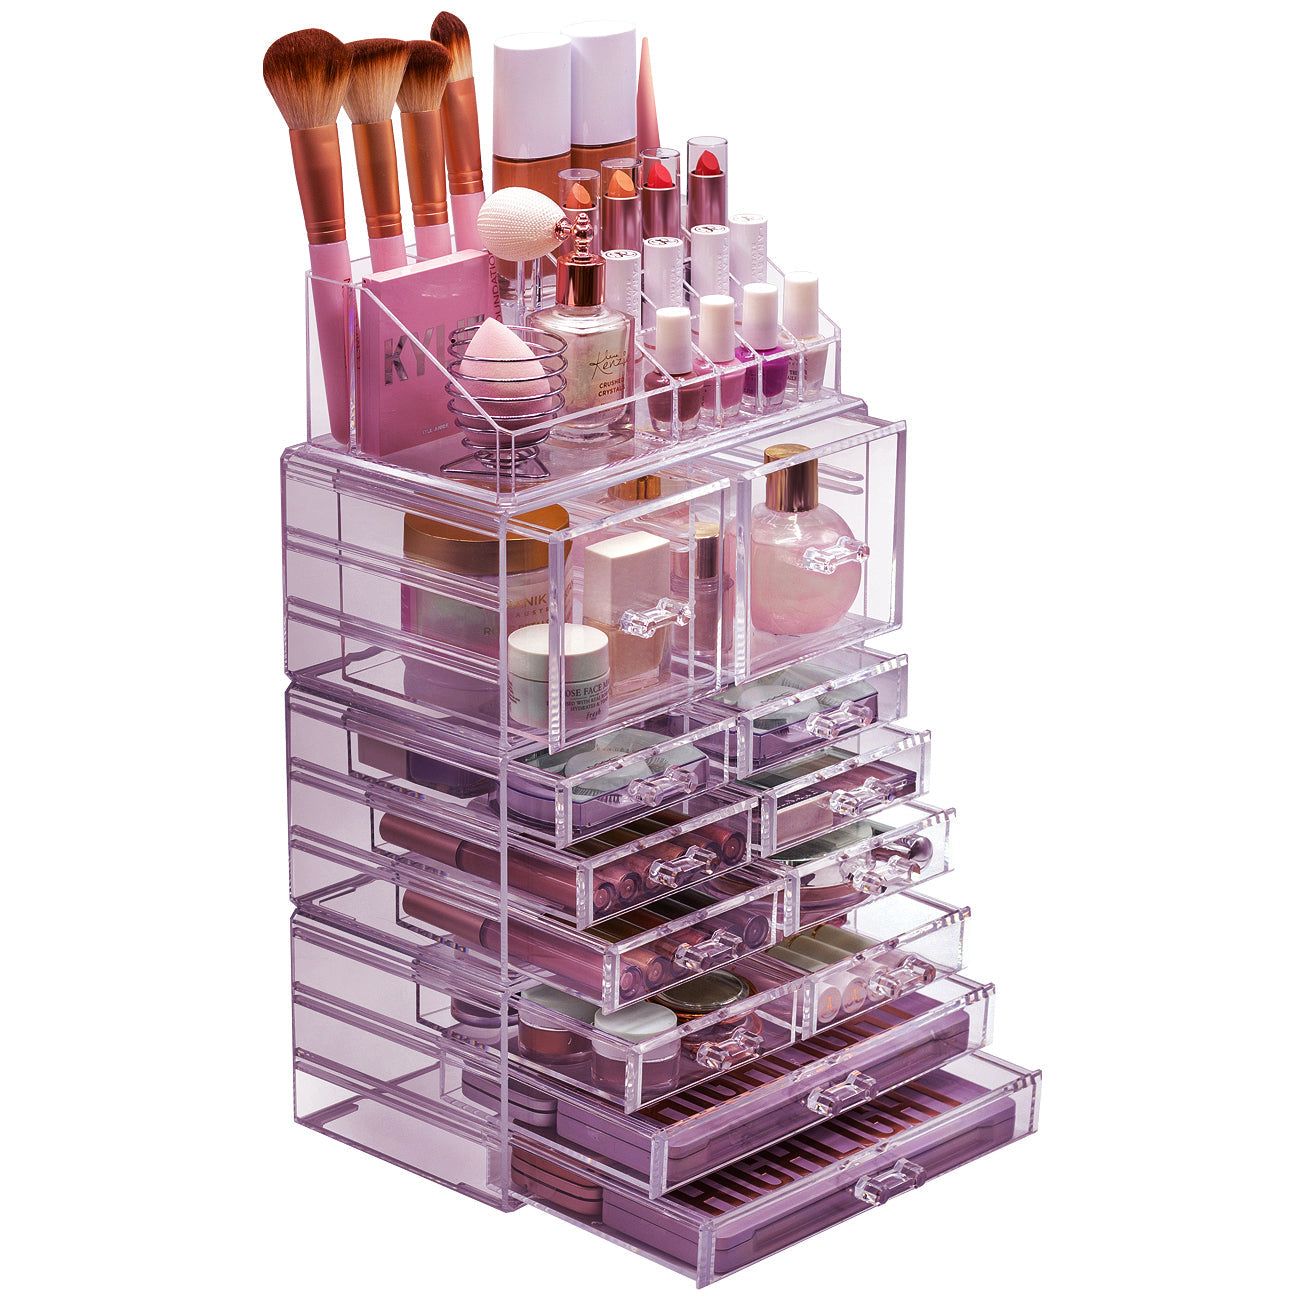 X-Large Clear Makeup Organizer Case - 4 Piece Set (12 drawers